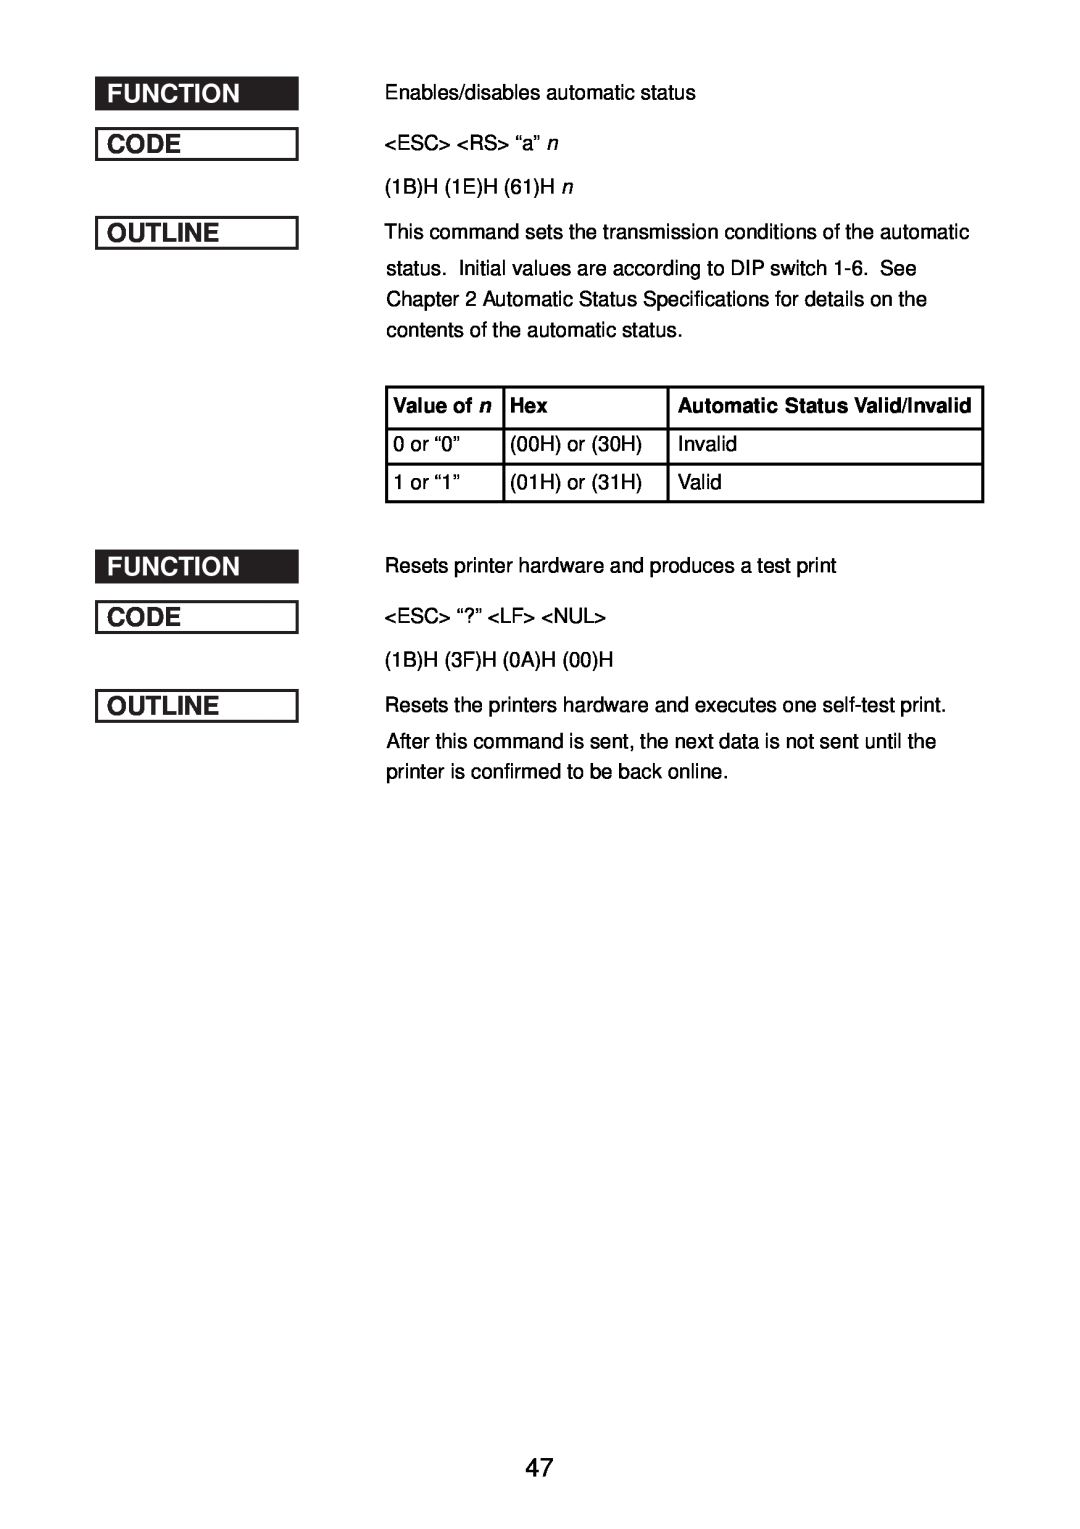 Star Micronics SP2000 manual Function, Automatic Status Valid/Invalid 